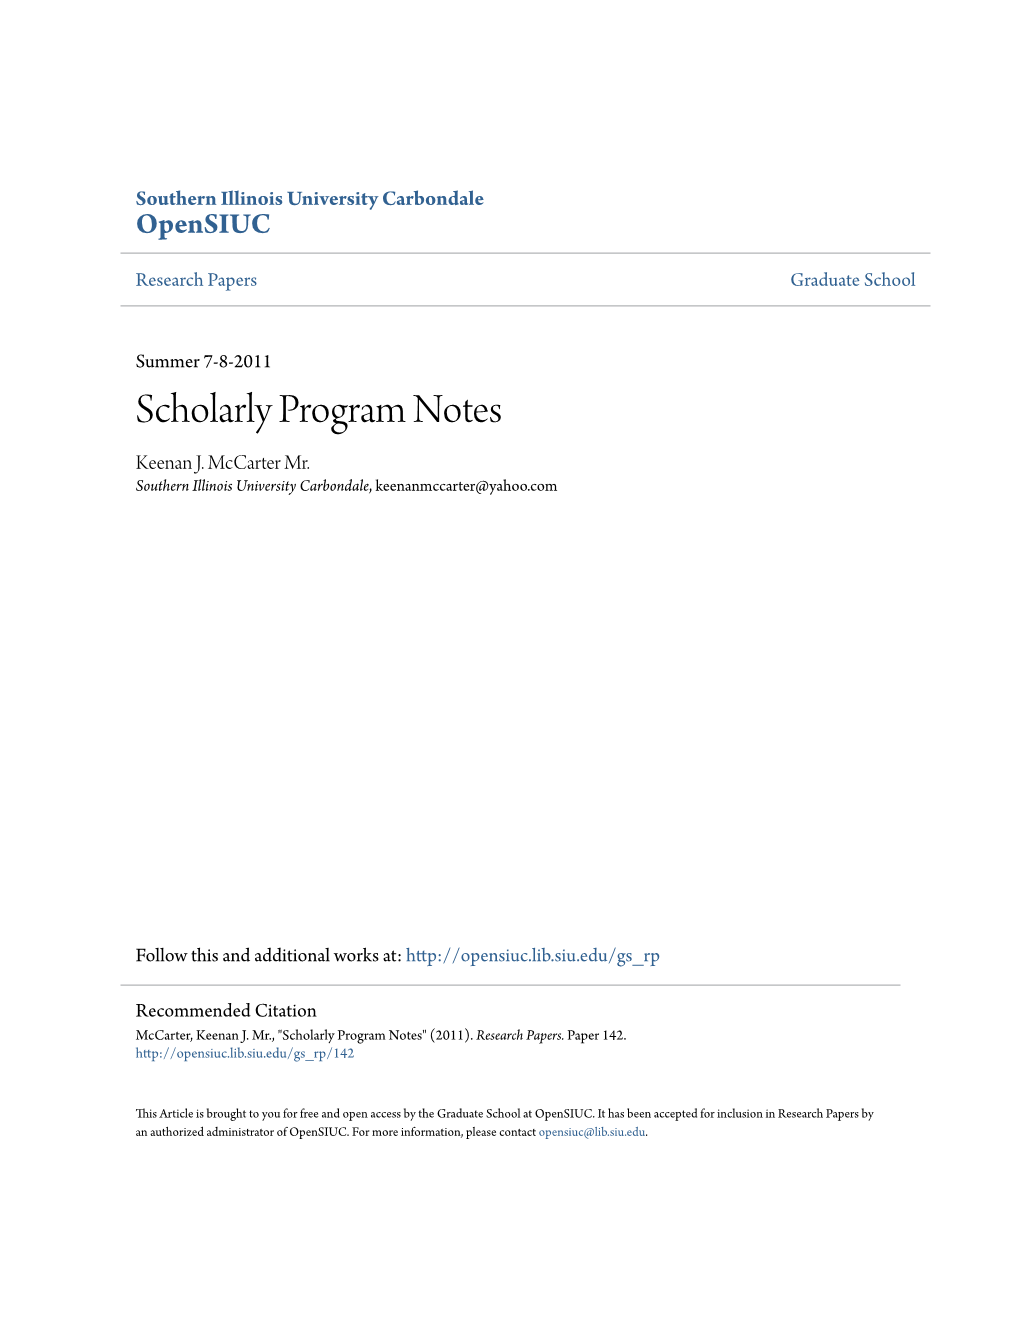 Scholarly Program Notes Keenan J